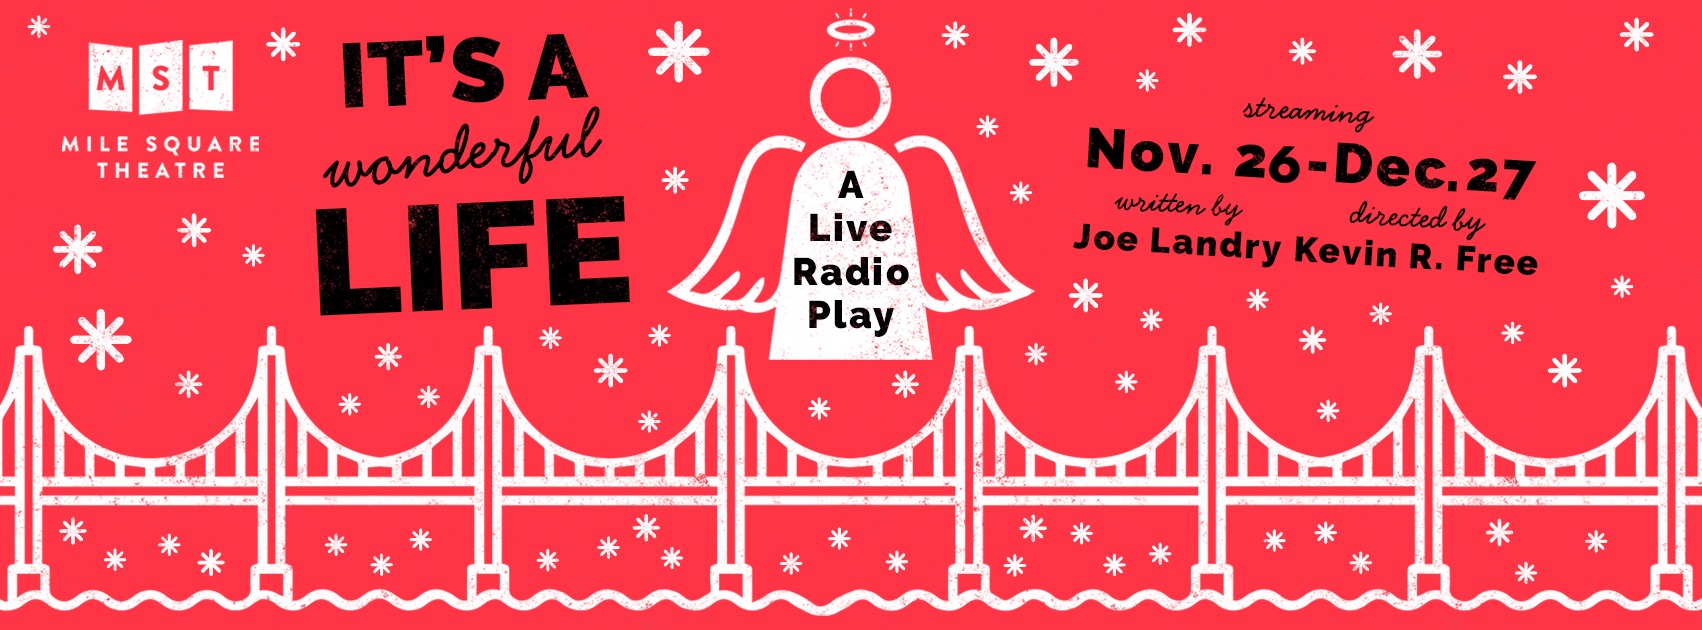 Image header for Mile Square Theatre's "It's a Wonderful Life" Live Radio Play; Nov 26-Dec. 27 2020